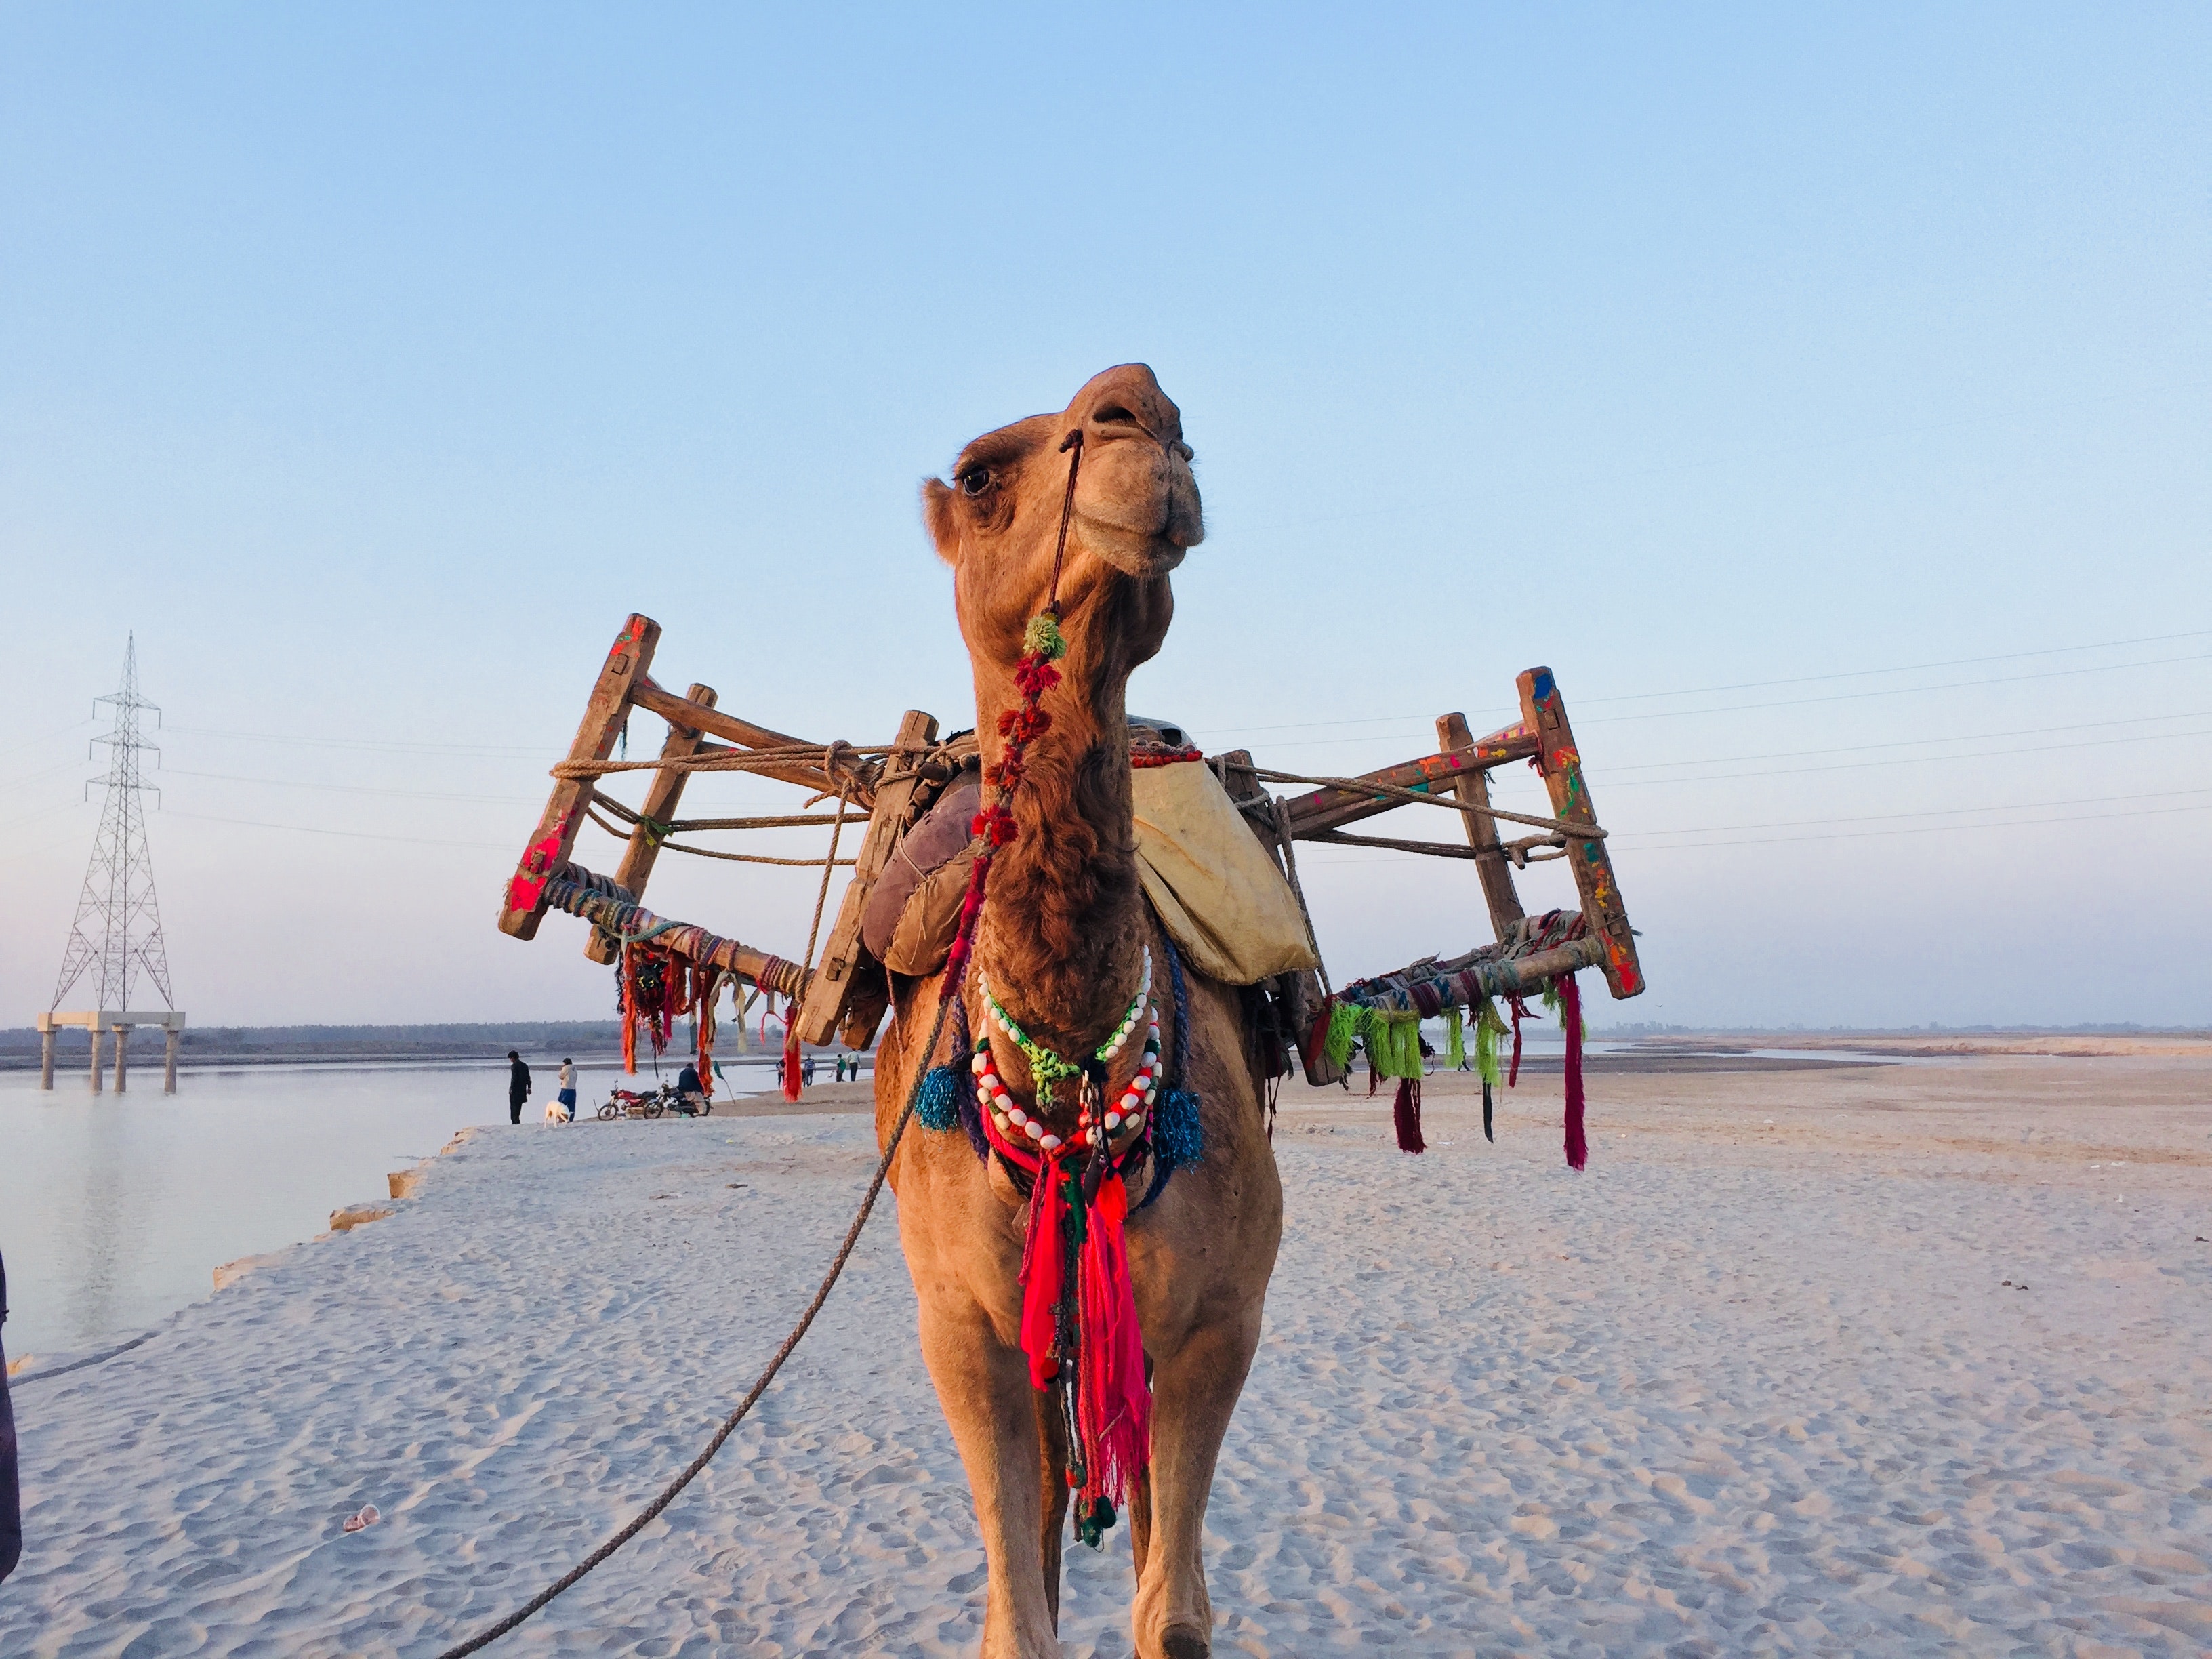 Brown camel photo